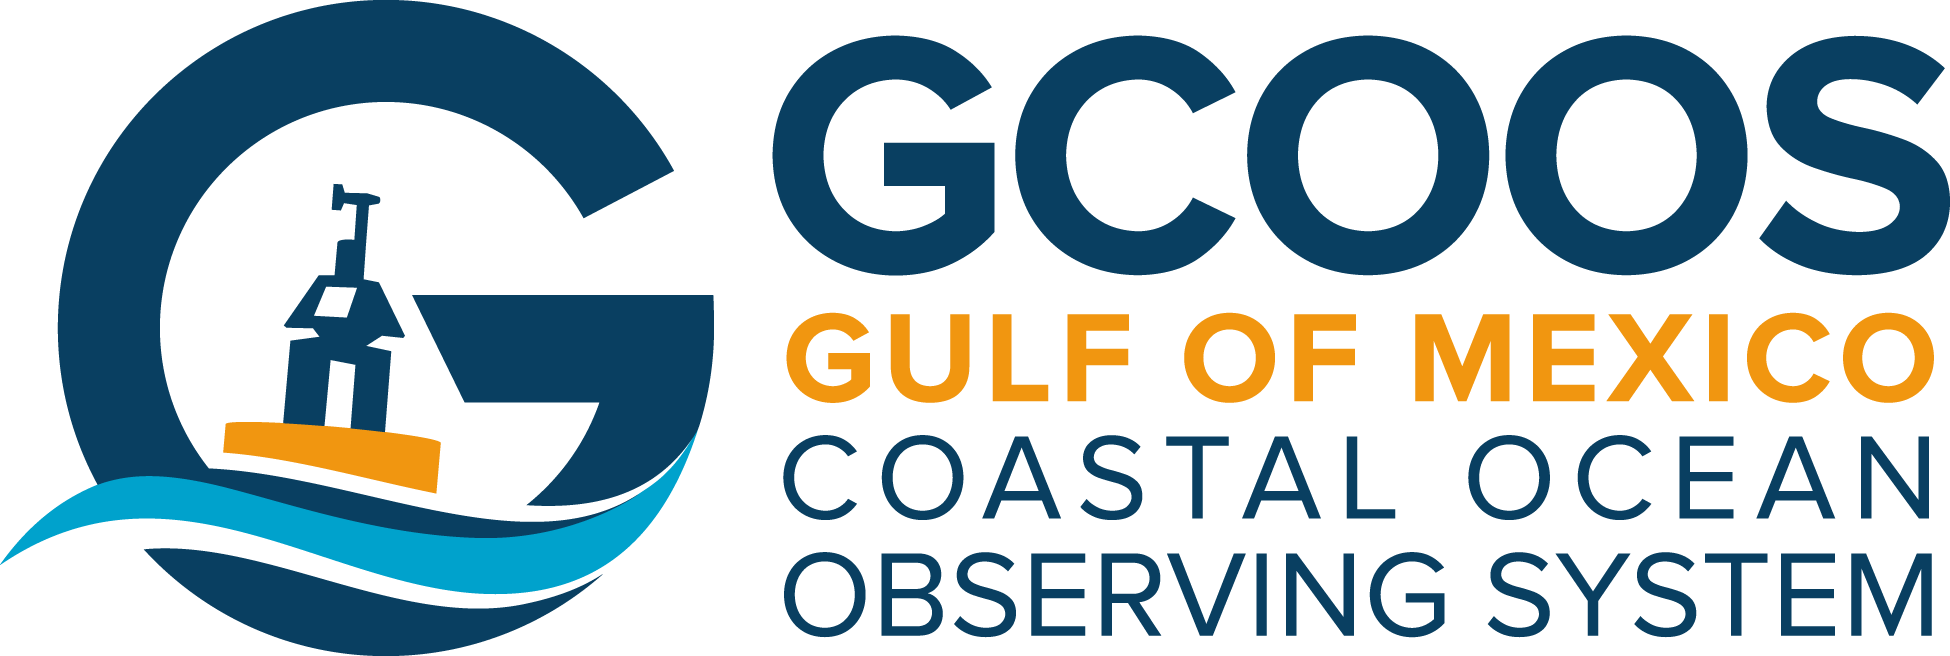 Gulf of Mexico Coastal Ocean Observing System-Regional Association (GCOOS-RA)